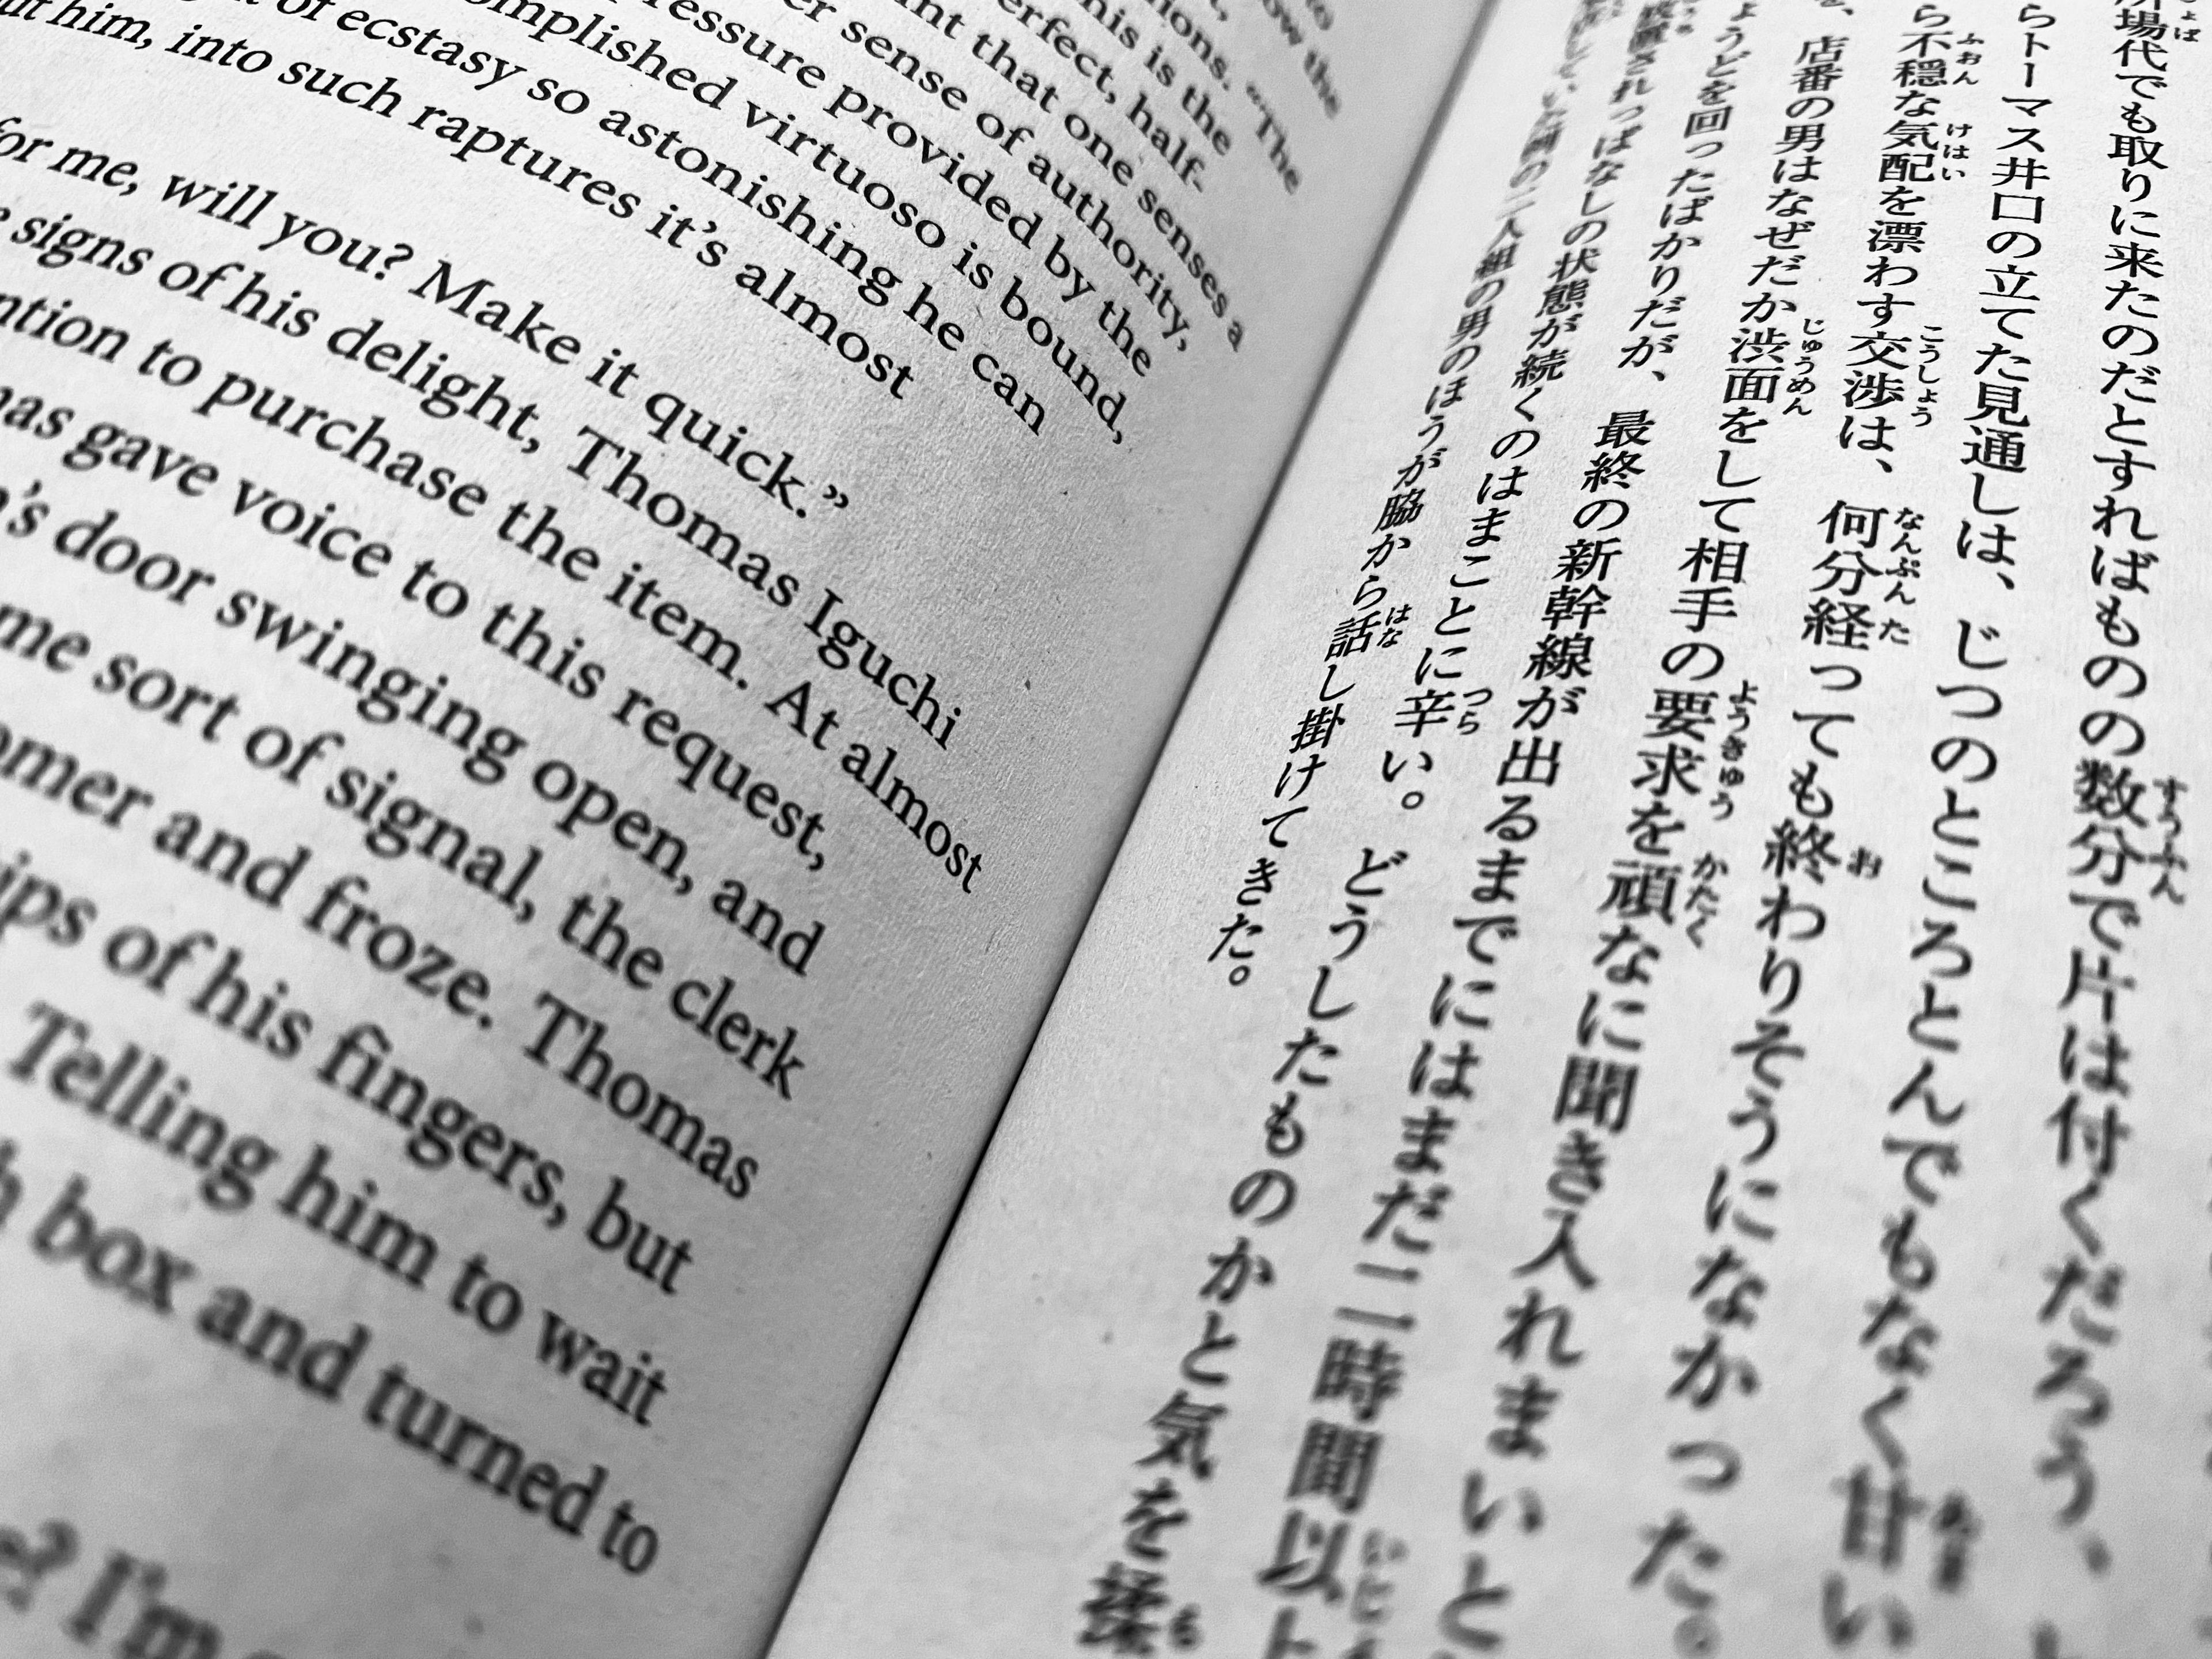 A book full of translations